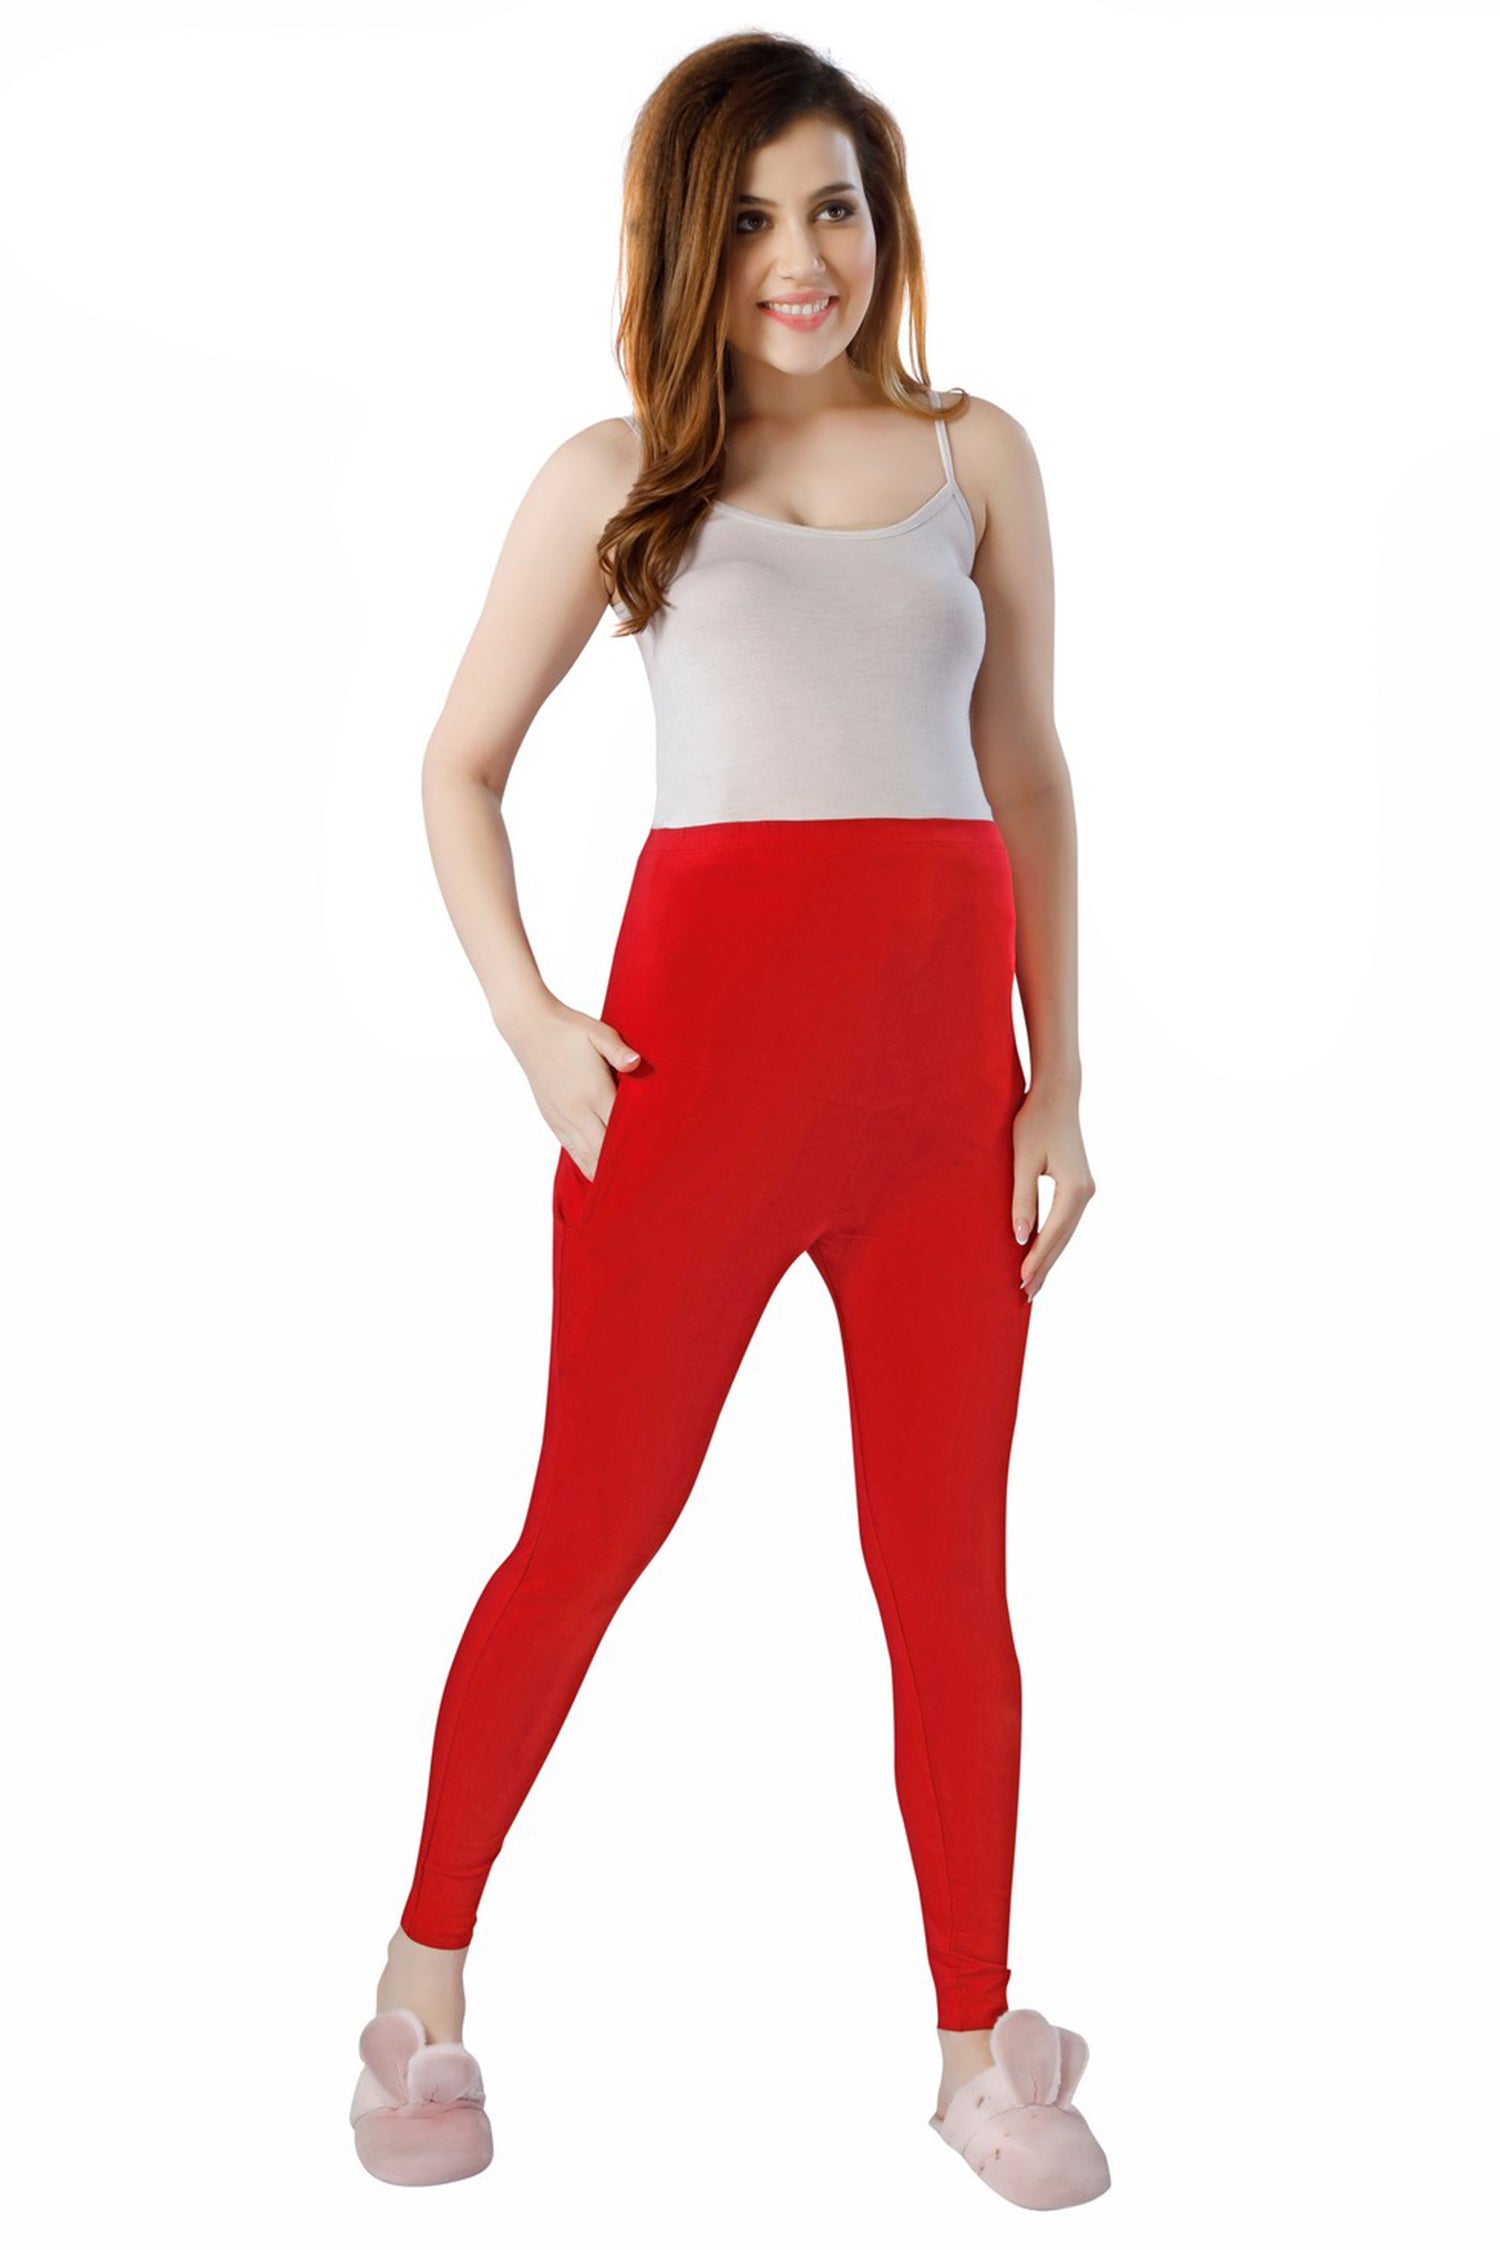 Women's REG/Plus Super Soft Cotton Blend Basic Workout Printed Pattern  Leggings | eBay